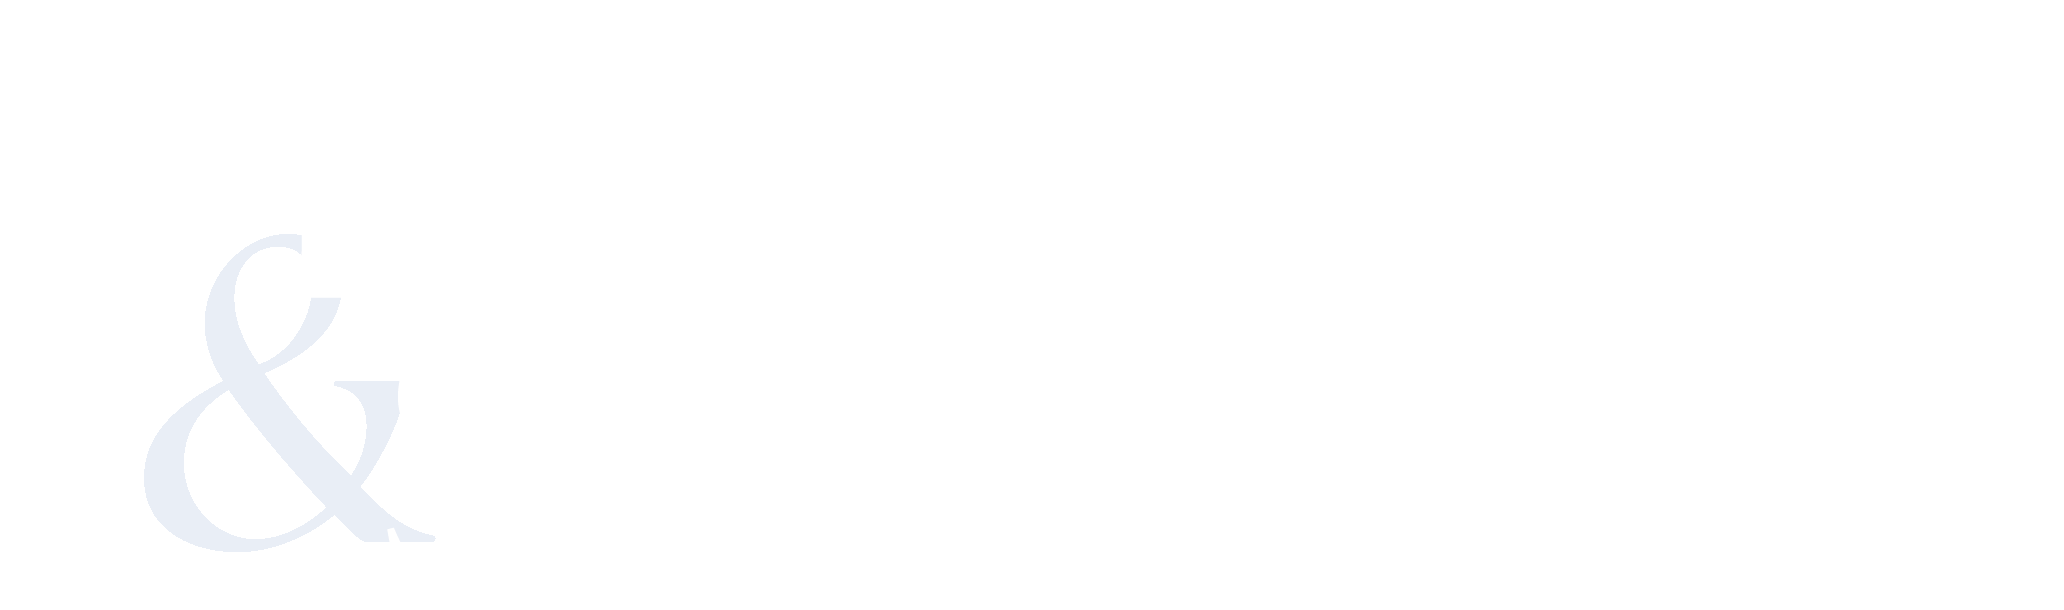 Matlab&Simulink_logo